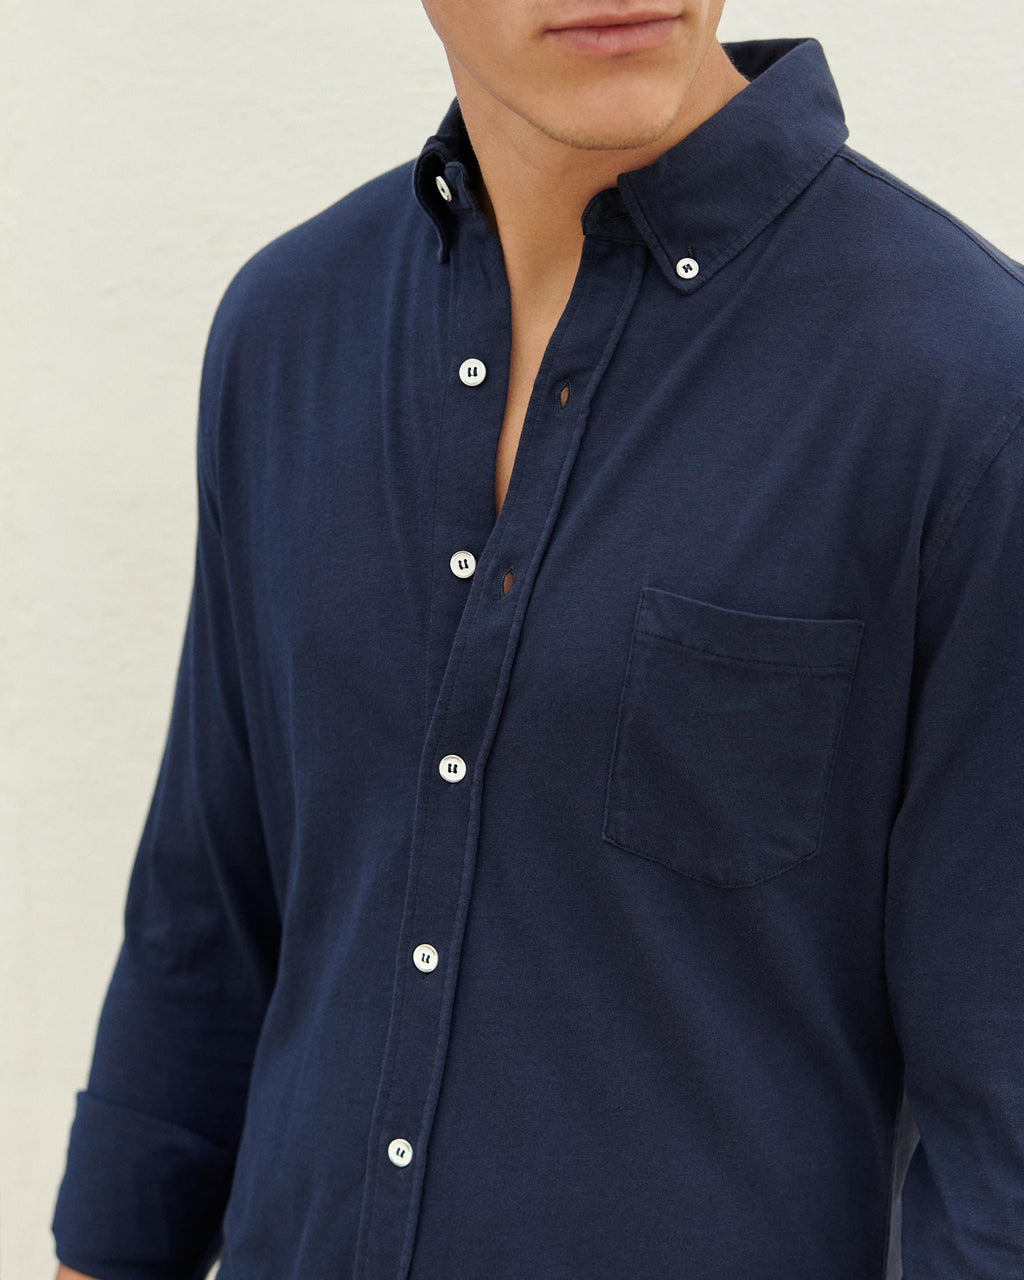 Organic Cotton Pedro Shirt - Long Sleeves - Navy